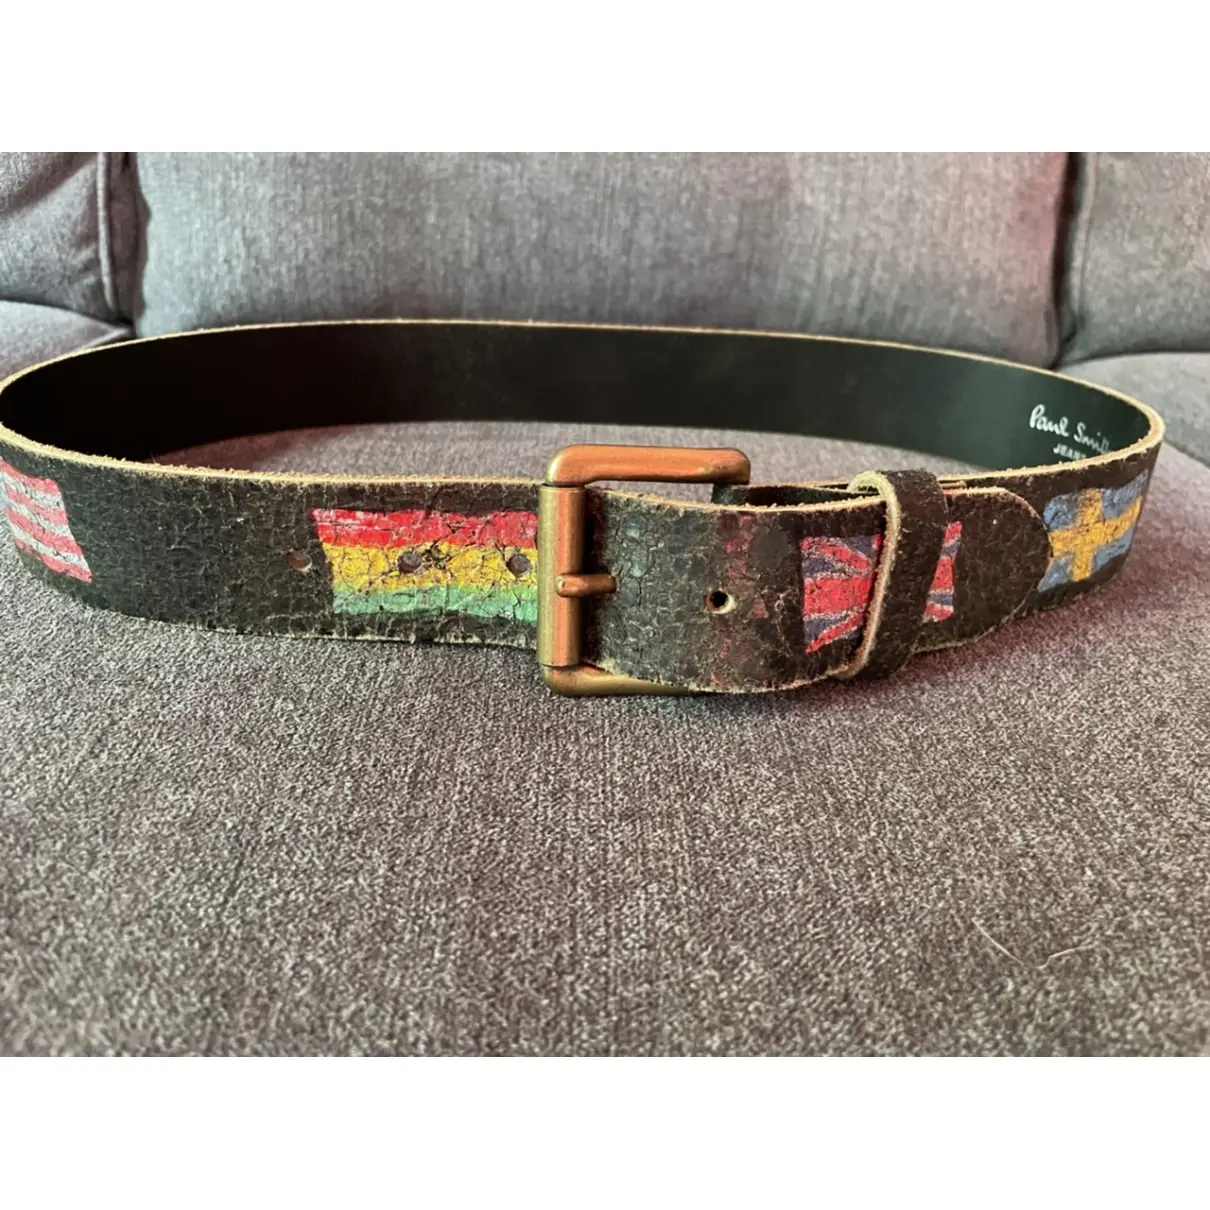 Buy Paul Smith Leather belt online